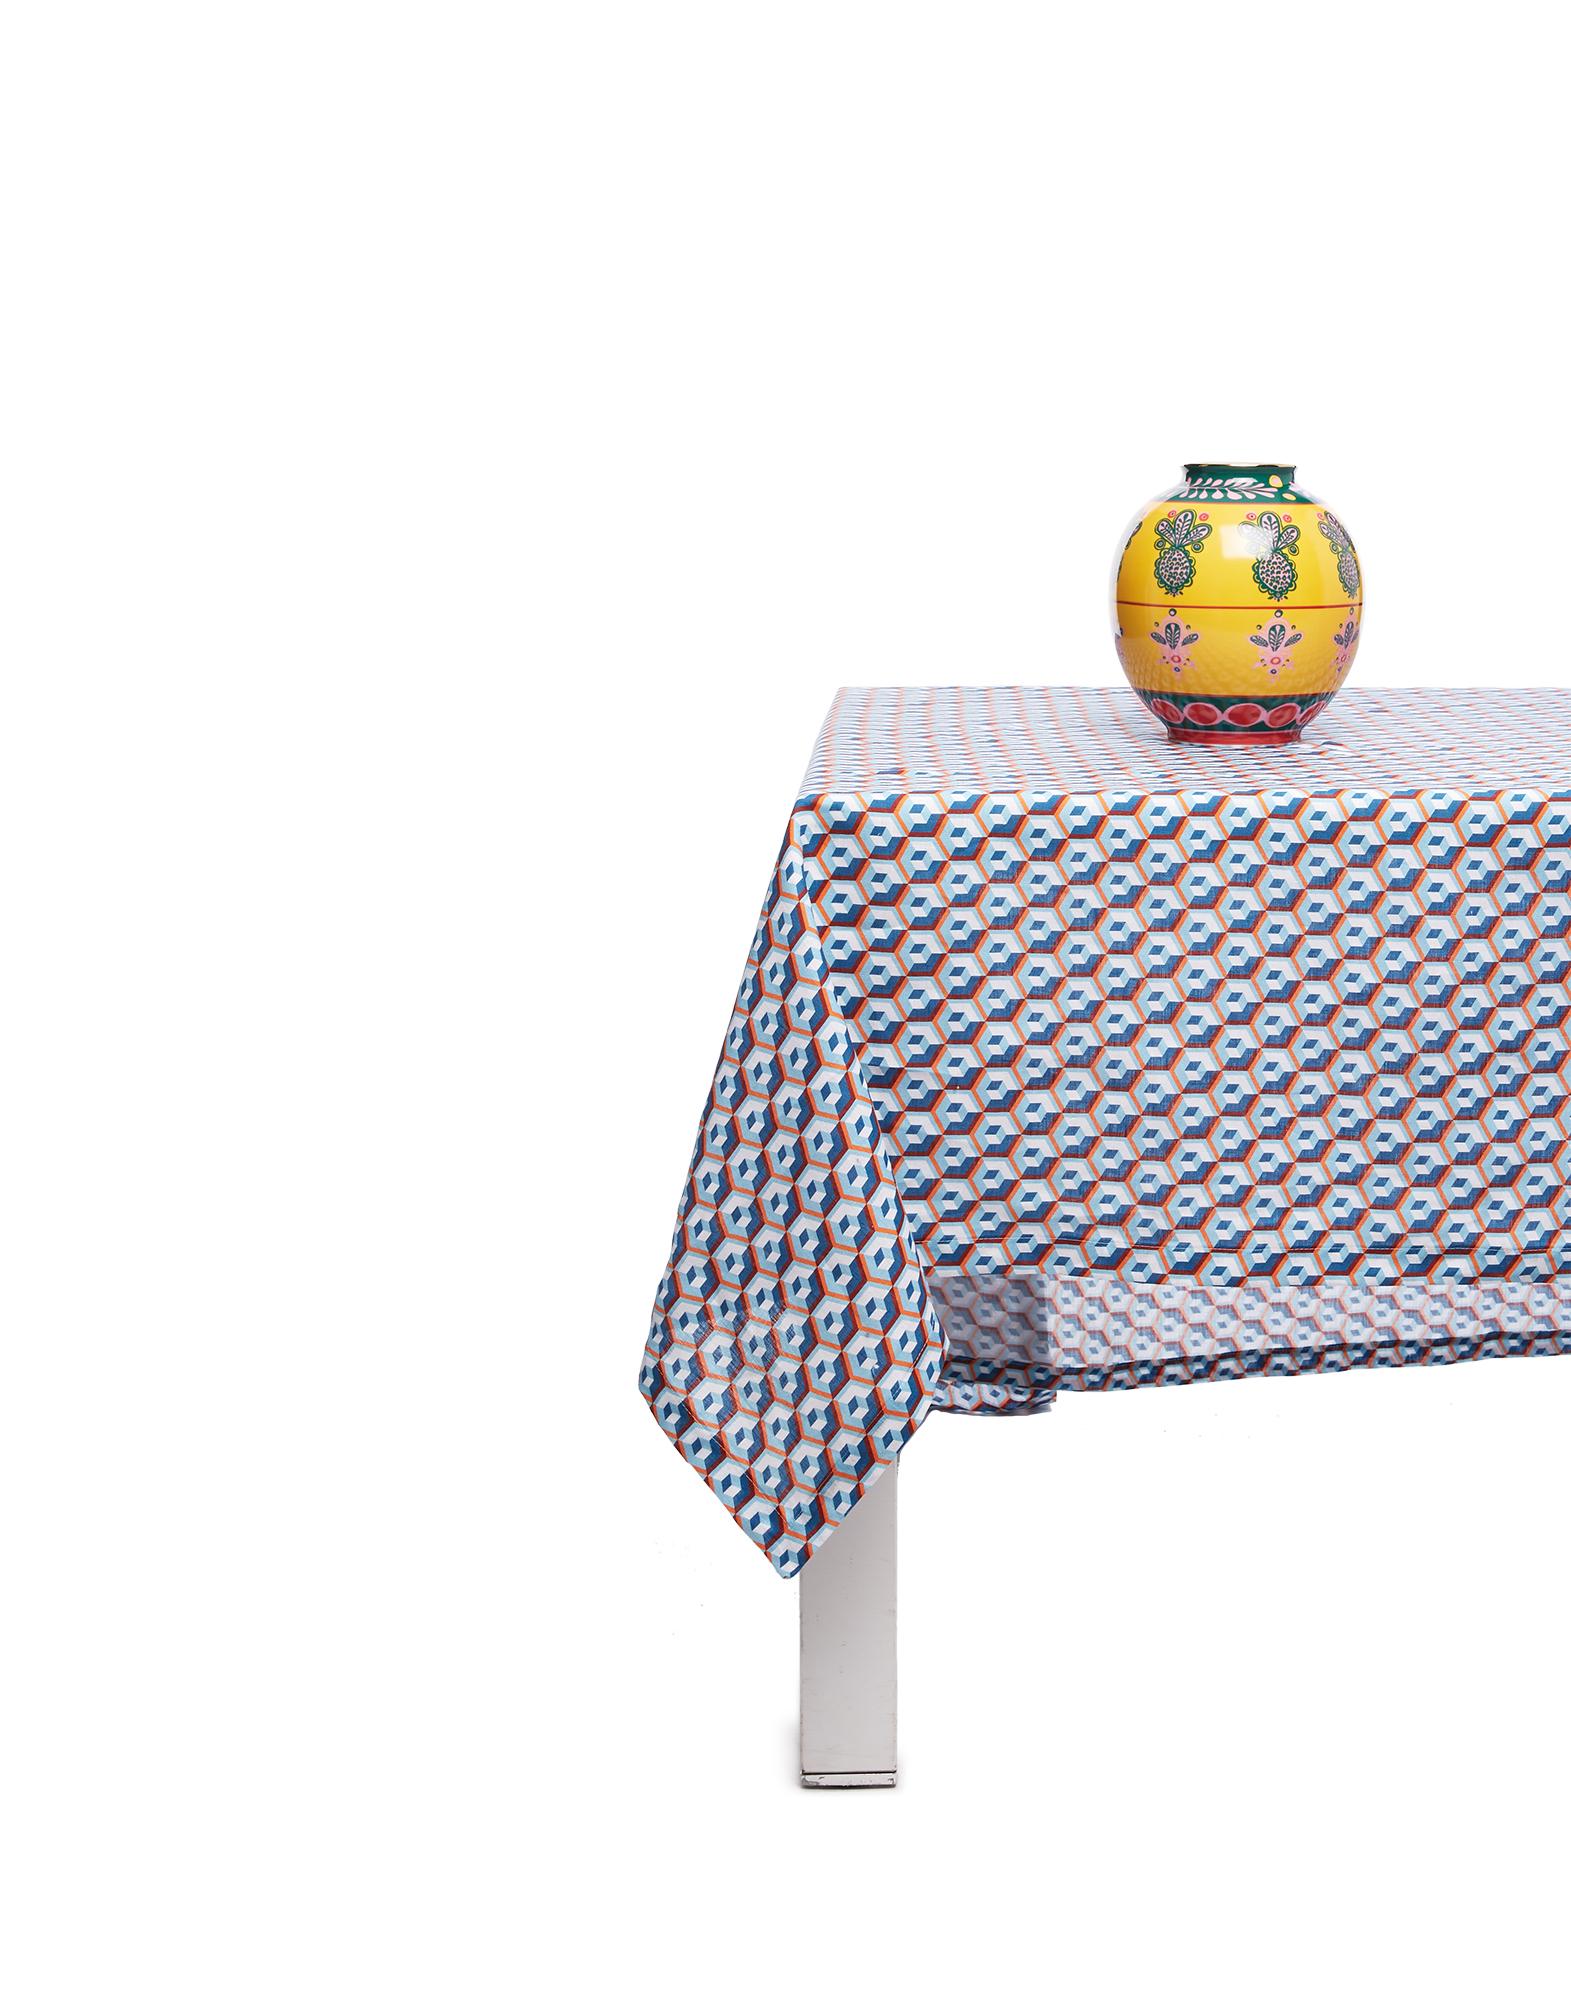 Italian Large Tablecloth Cubi Blu Print, 100% Linen by La DoubleJ